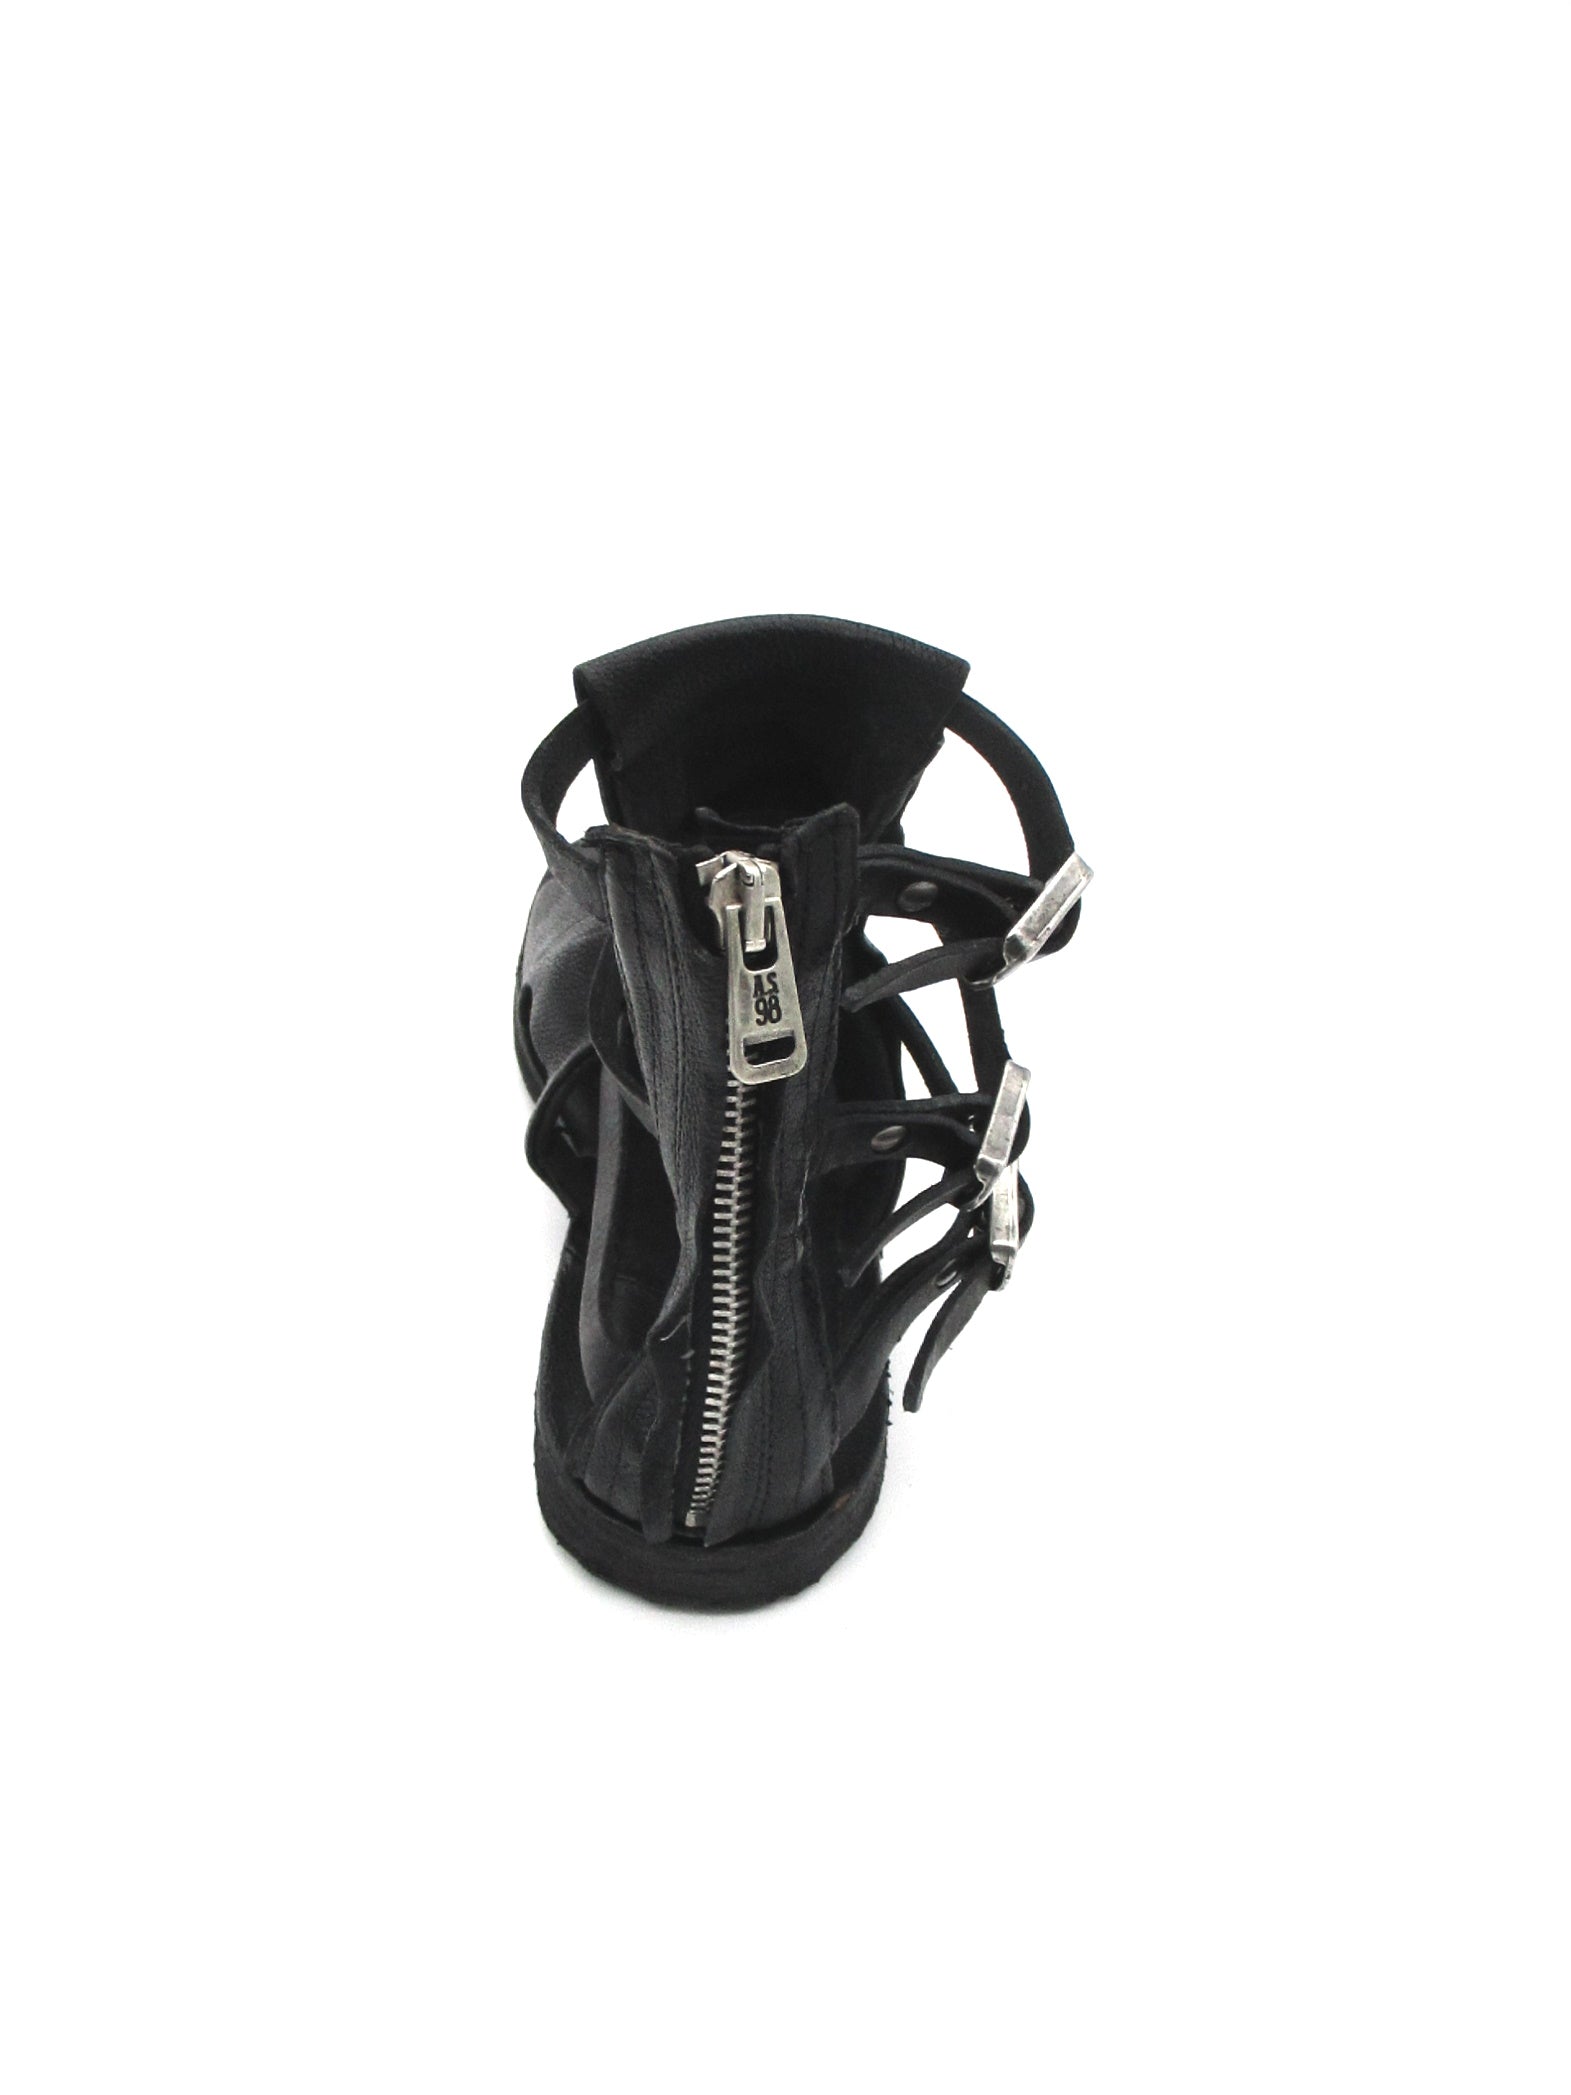 Sandalo pelle donna AS98 Black - 534099 -